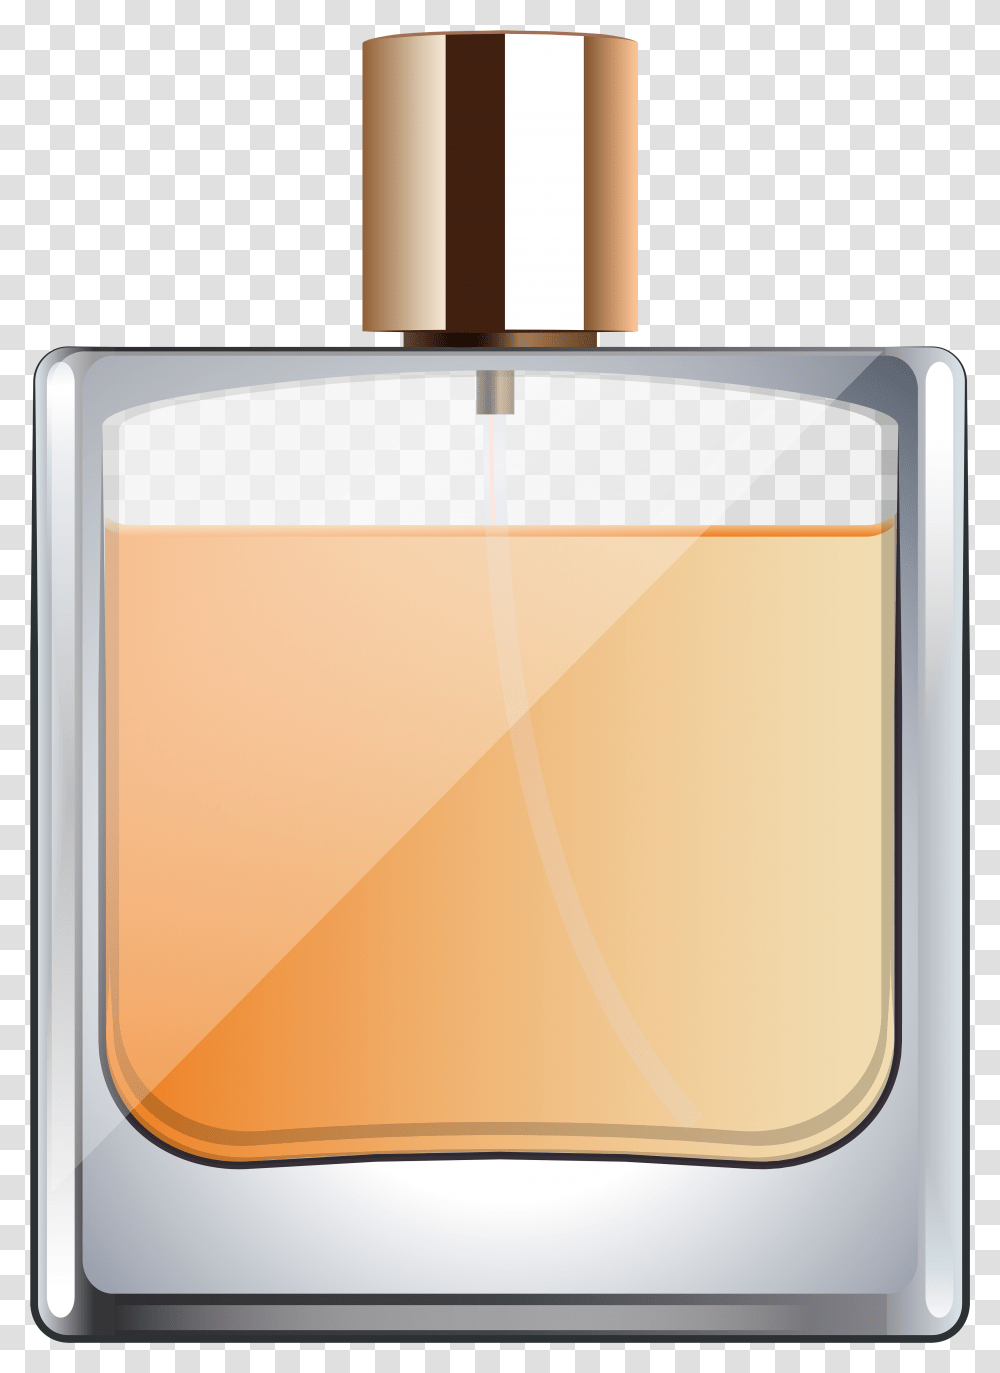 Perfume Bottle Clip Art Image Perfume Bottle, Cosmetics Transparent Png